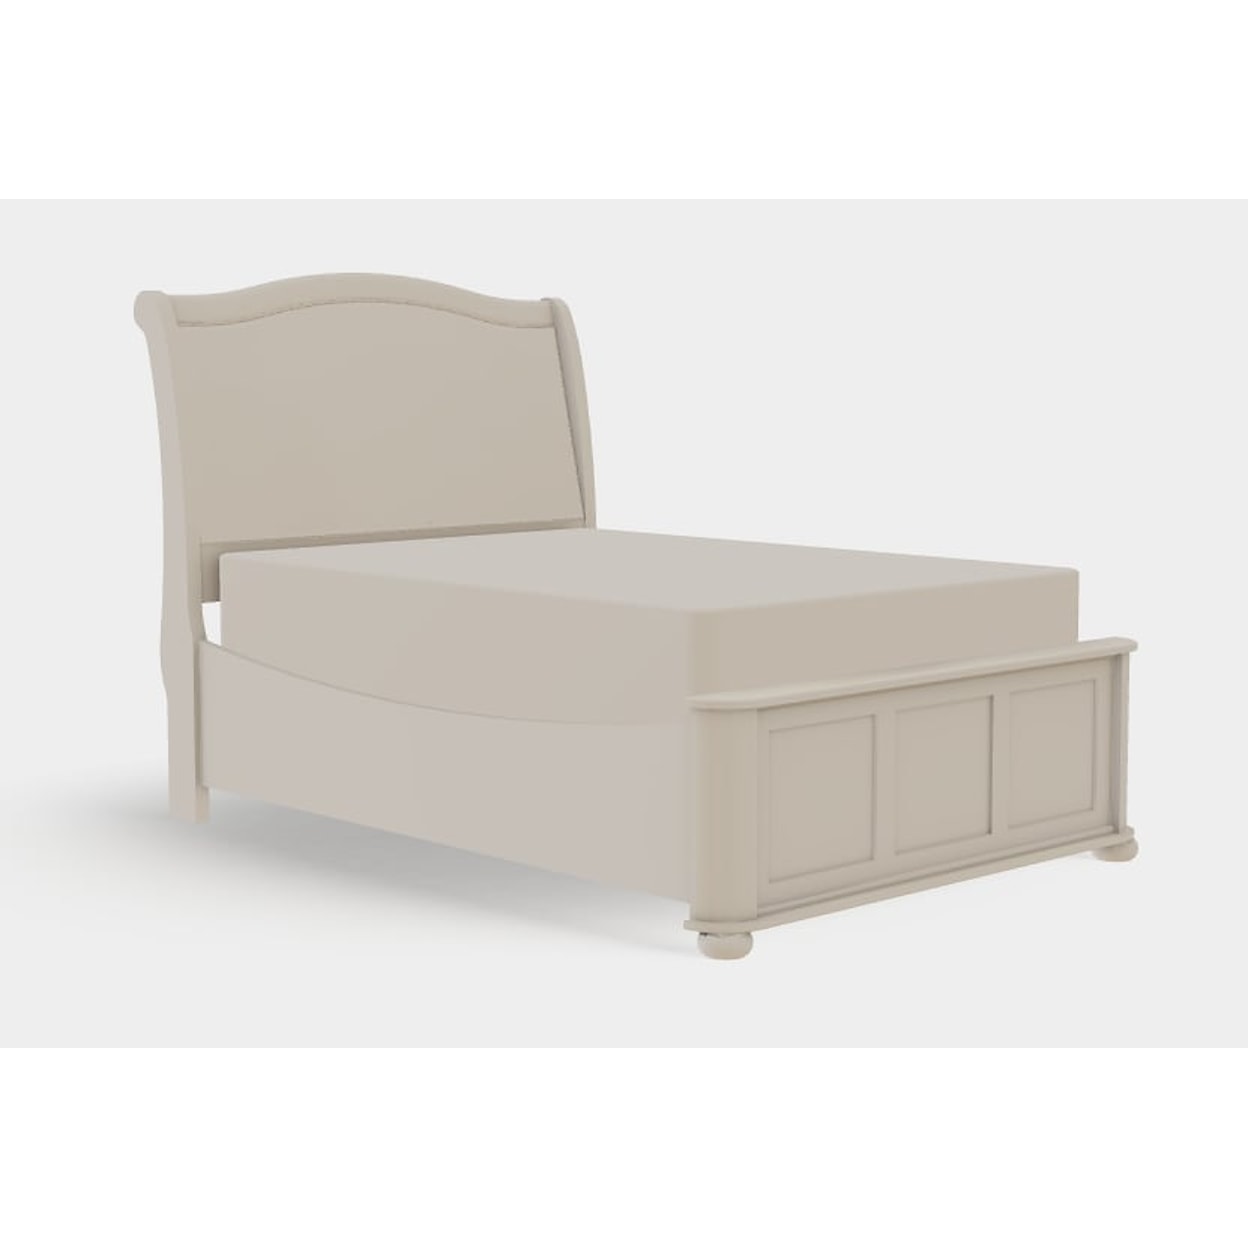 Mavin Kingsport Full Upholstered Bed Low Footboard